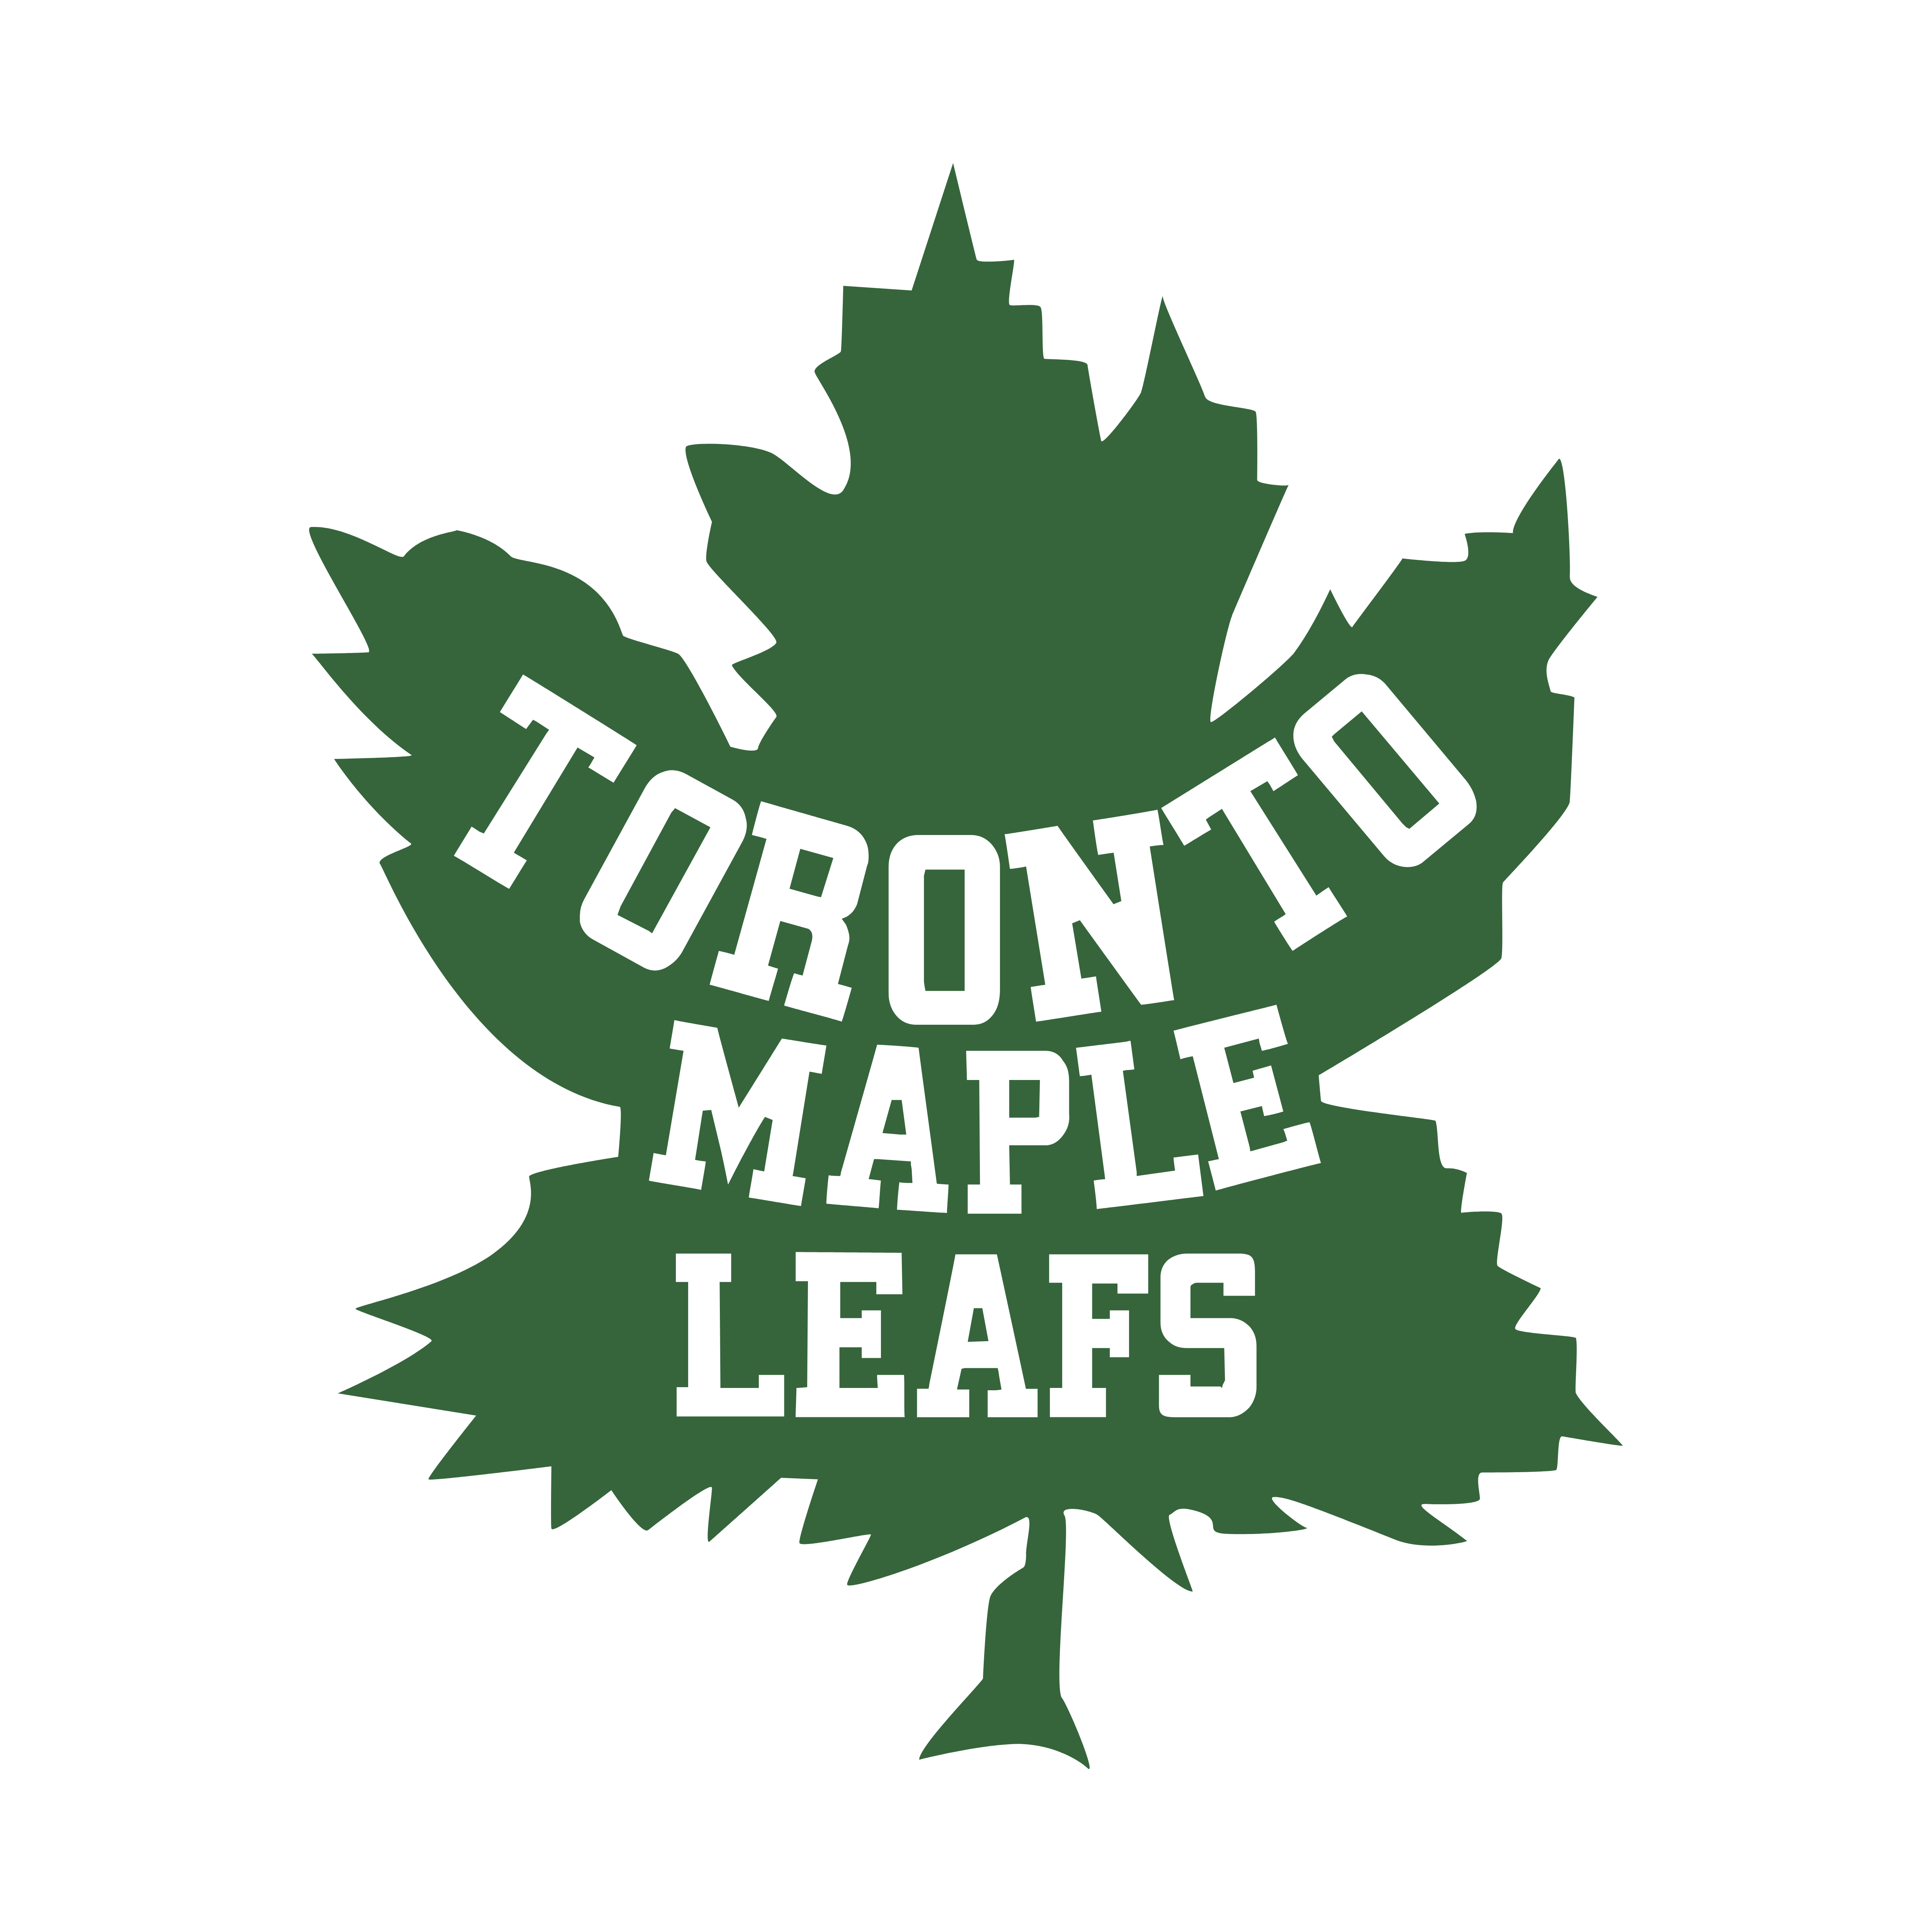 Toronto Maple Leafs – Logos Download